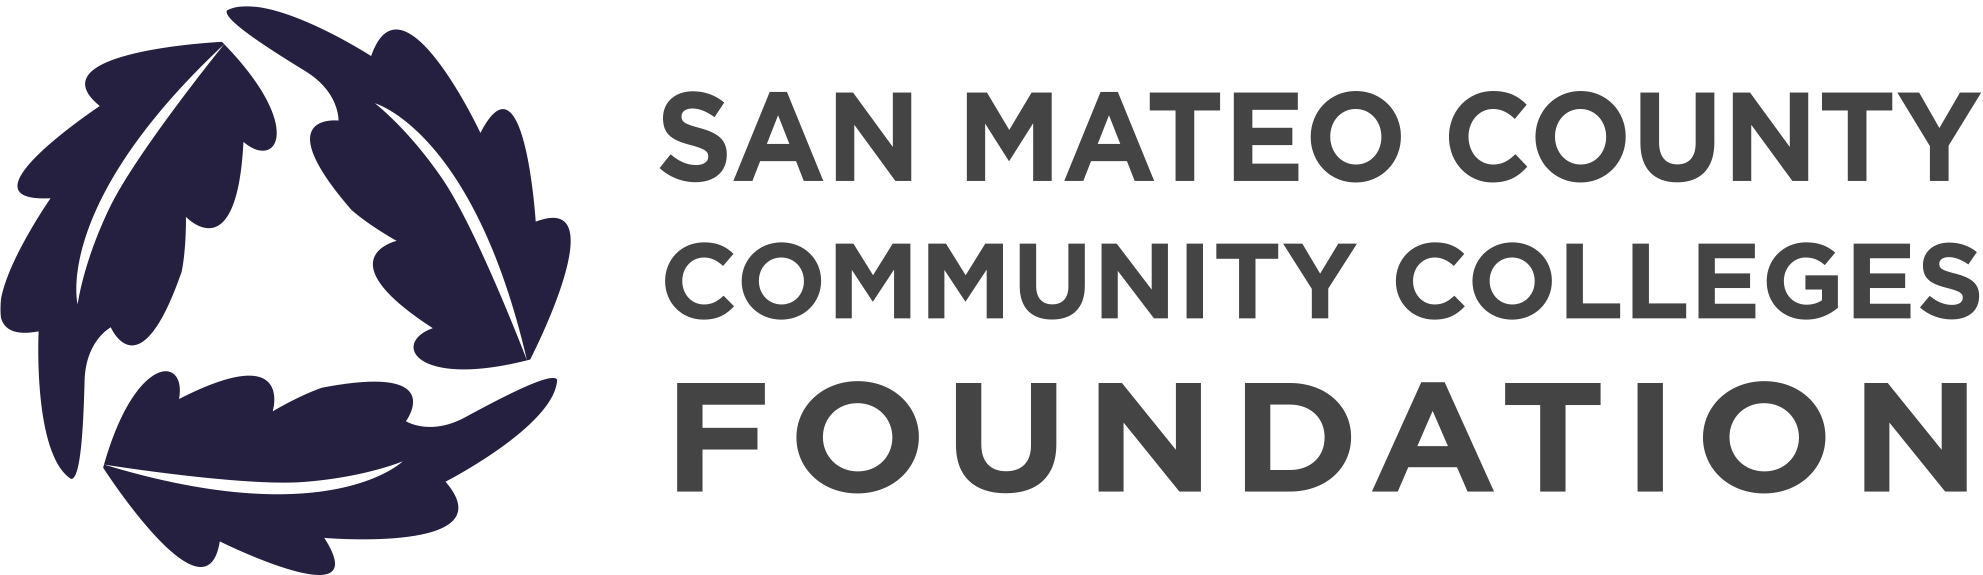 San Mateo County Community College